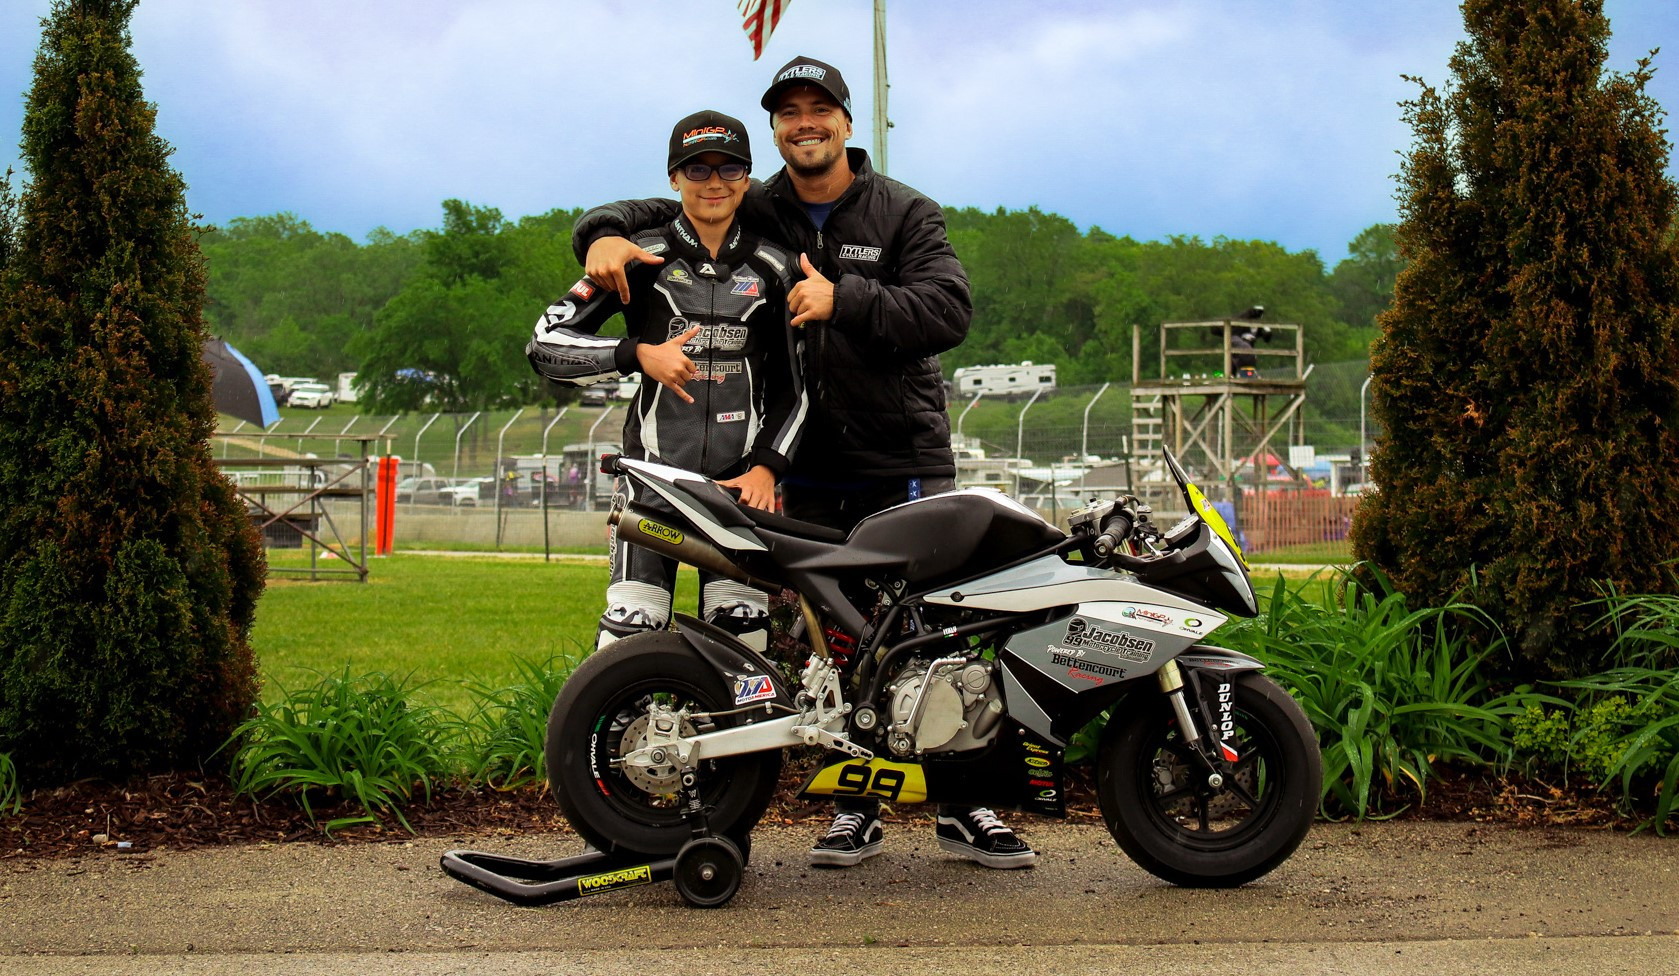 MotoAmerica Superbike racer PJ Jacobsen (right) with MotoAmerica Mini Cup racer Nathan Bettencourt (left). Photo by Sarah Bettencourt.